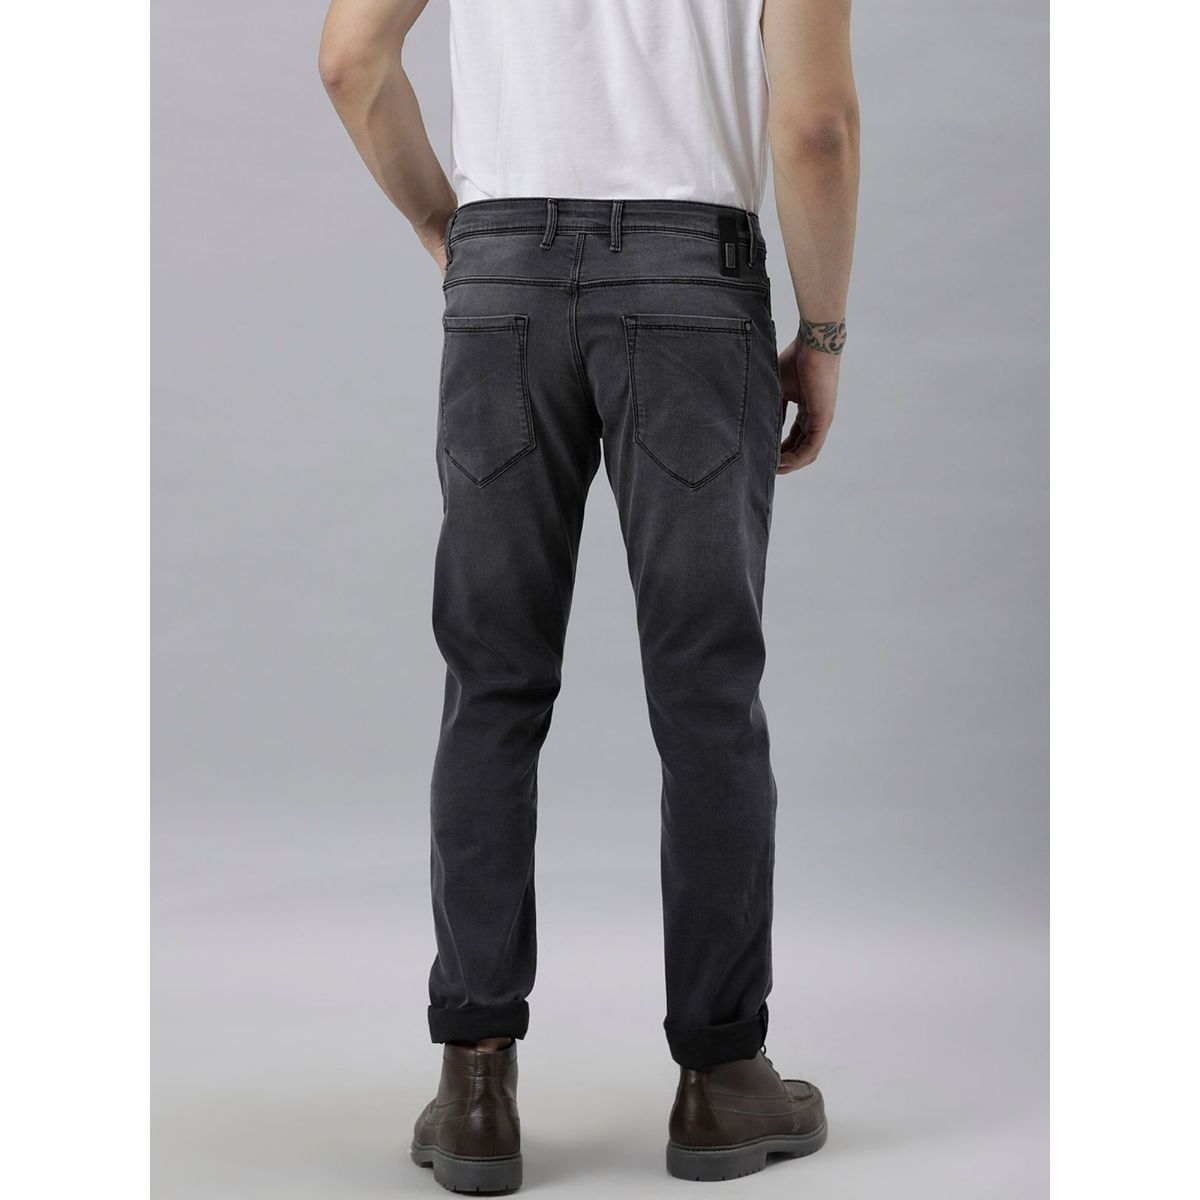 Buy RARE RABBIT Men's Solid Cotton Blend Trousers (8907279238832, Orange,  L) at Amazon.in